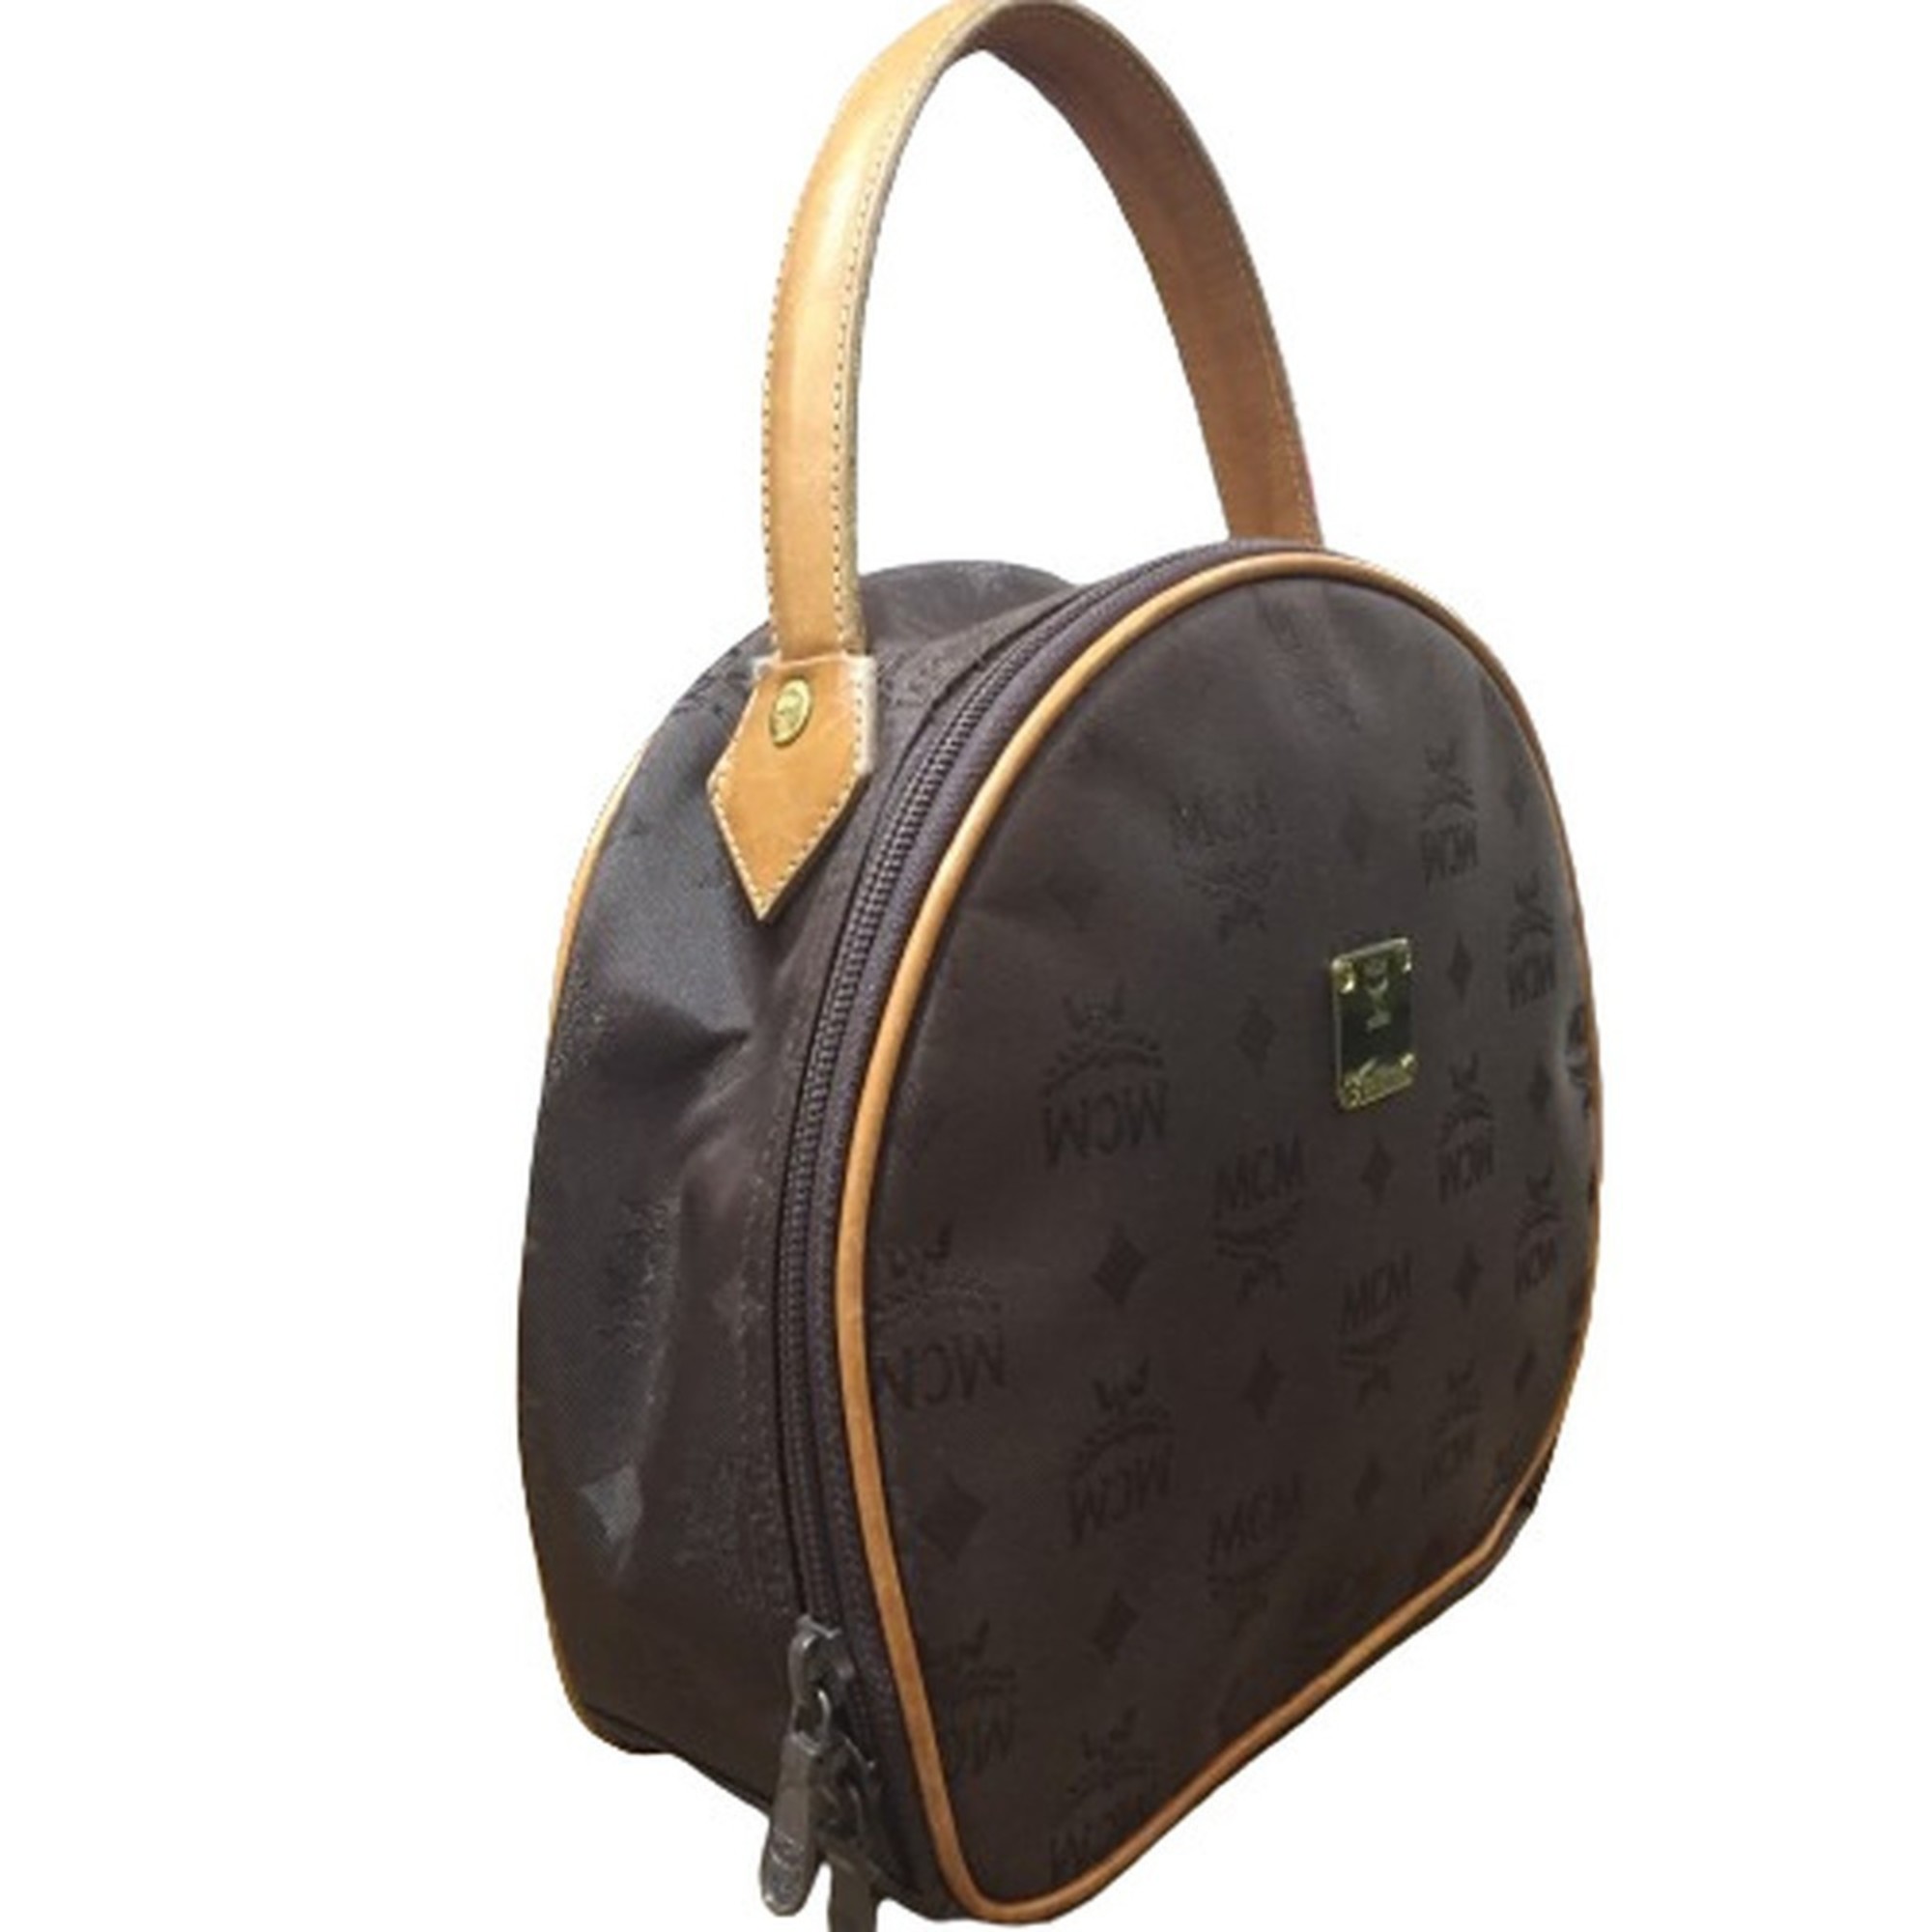 MCM Glam Handbag for Women, Brown, Kaizuka Store IT5MHQYGOG3Y RM1337D